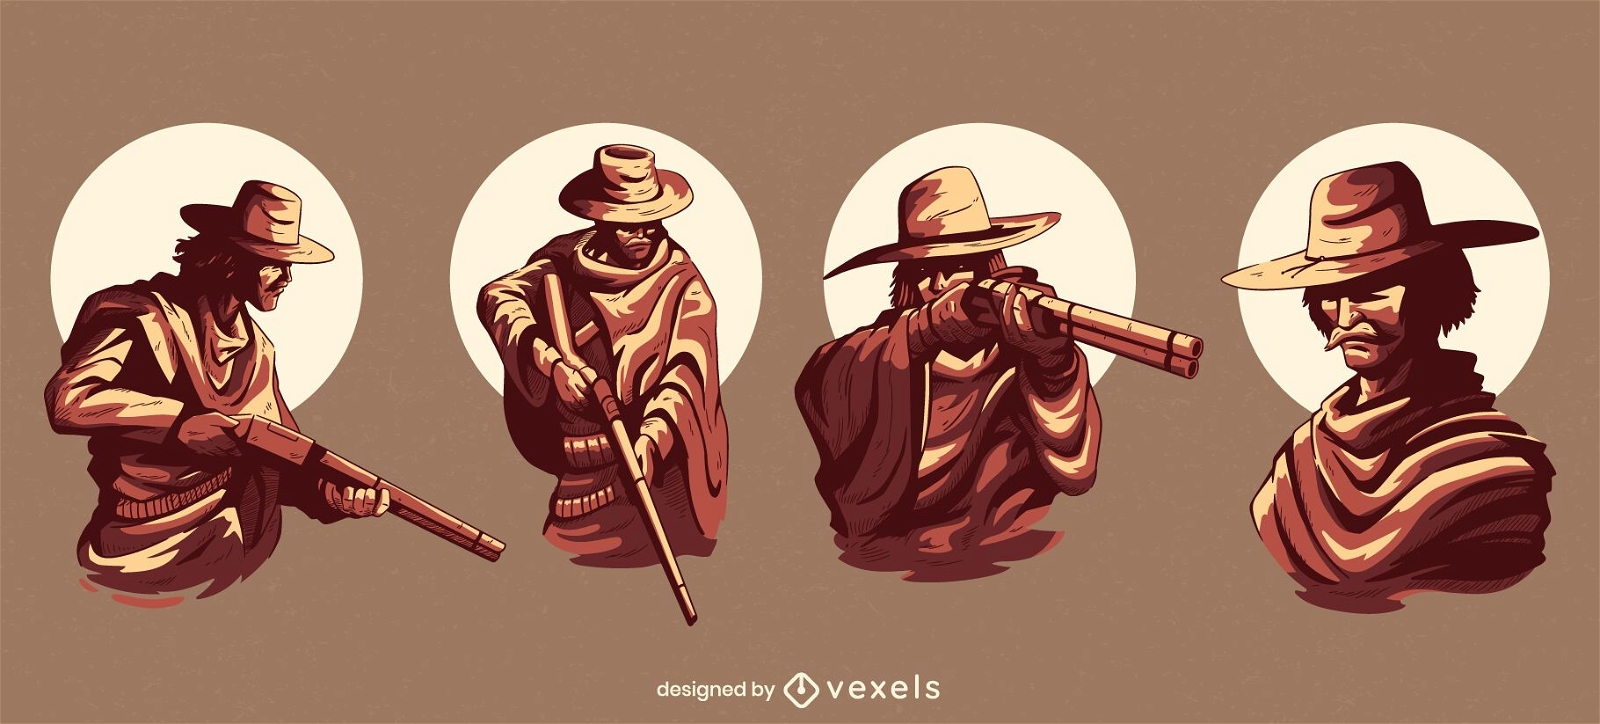 Cowboy characters illustration set